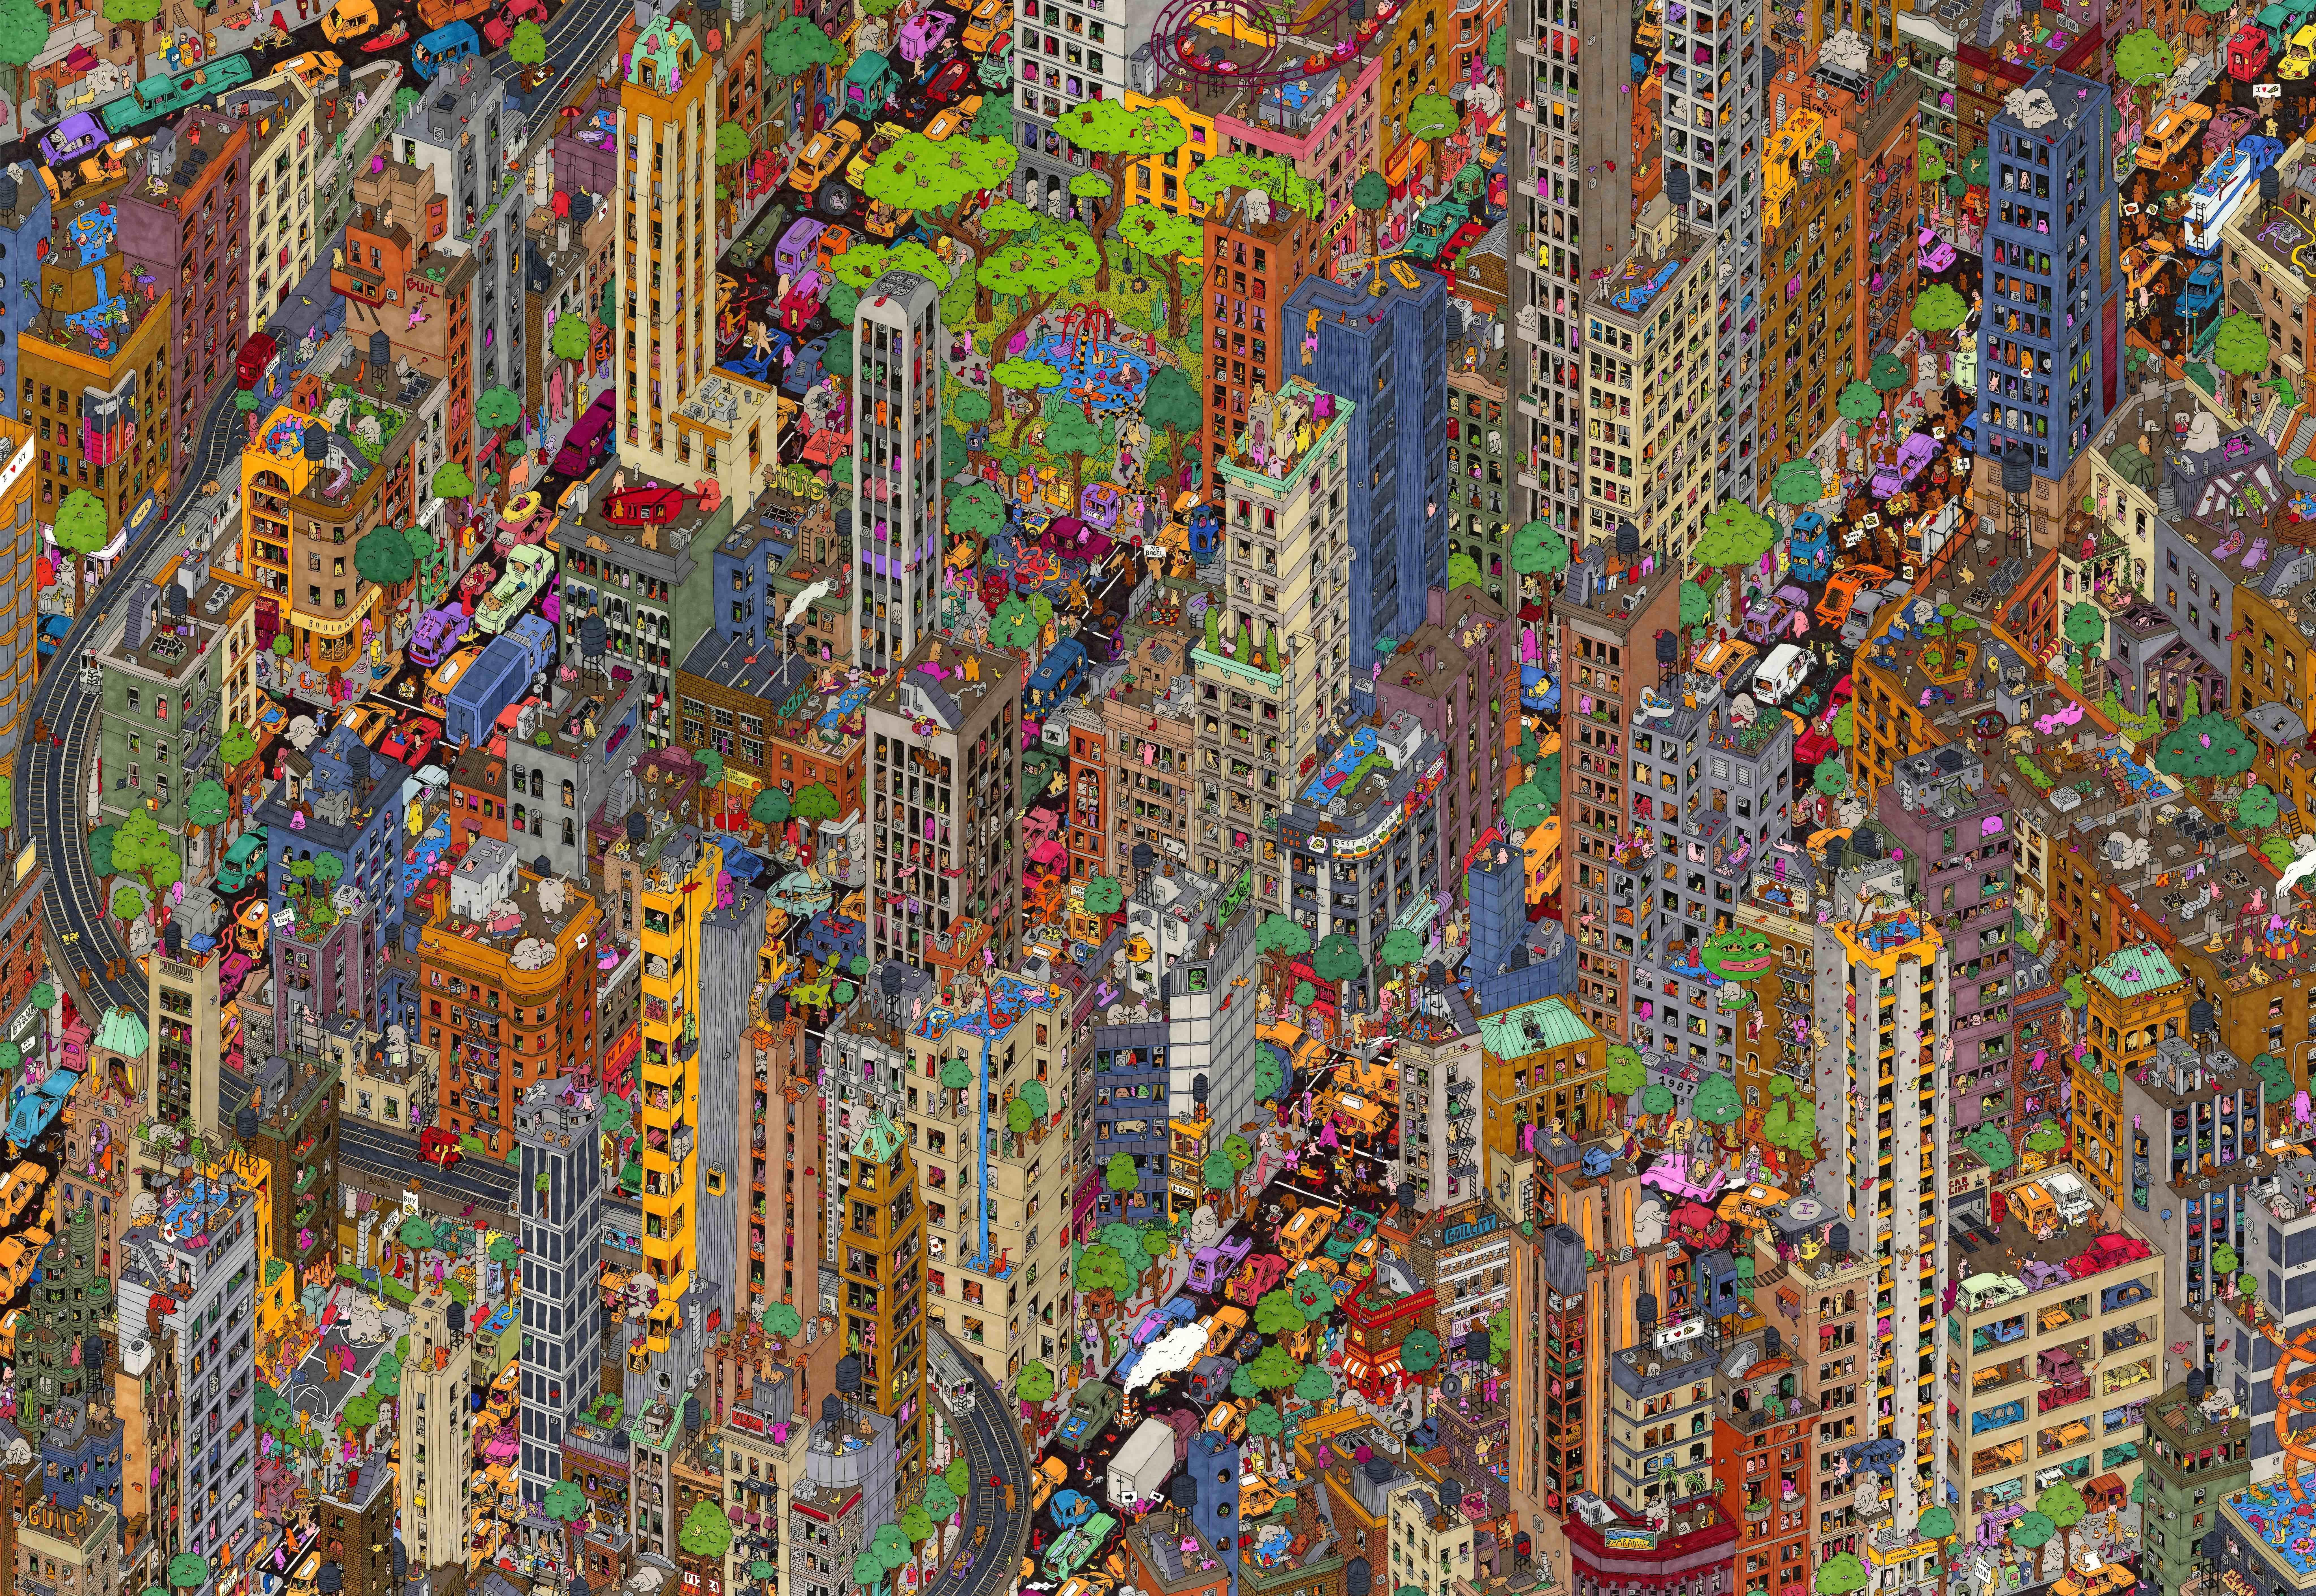 Neighborhoods - intricate hand-drawn colorful illustration of urban New York